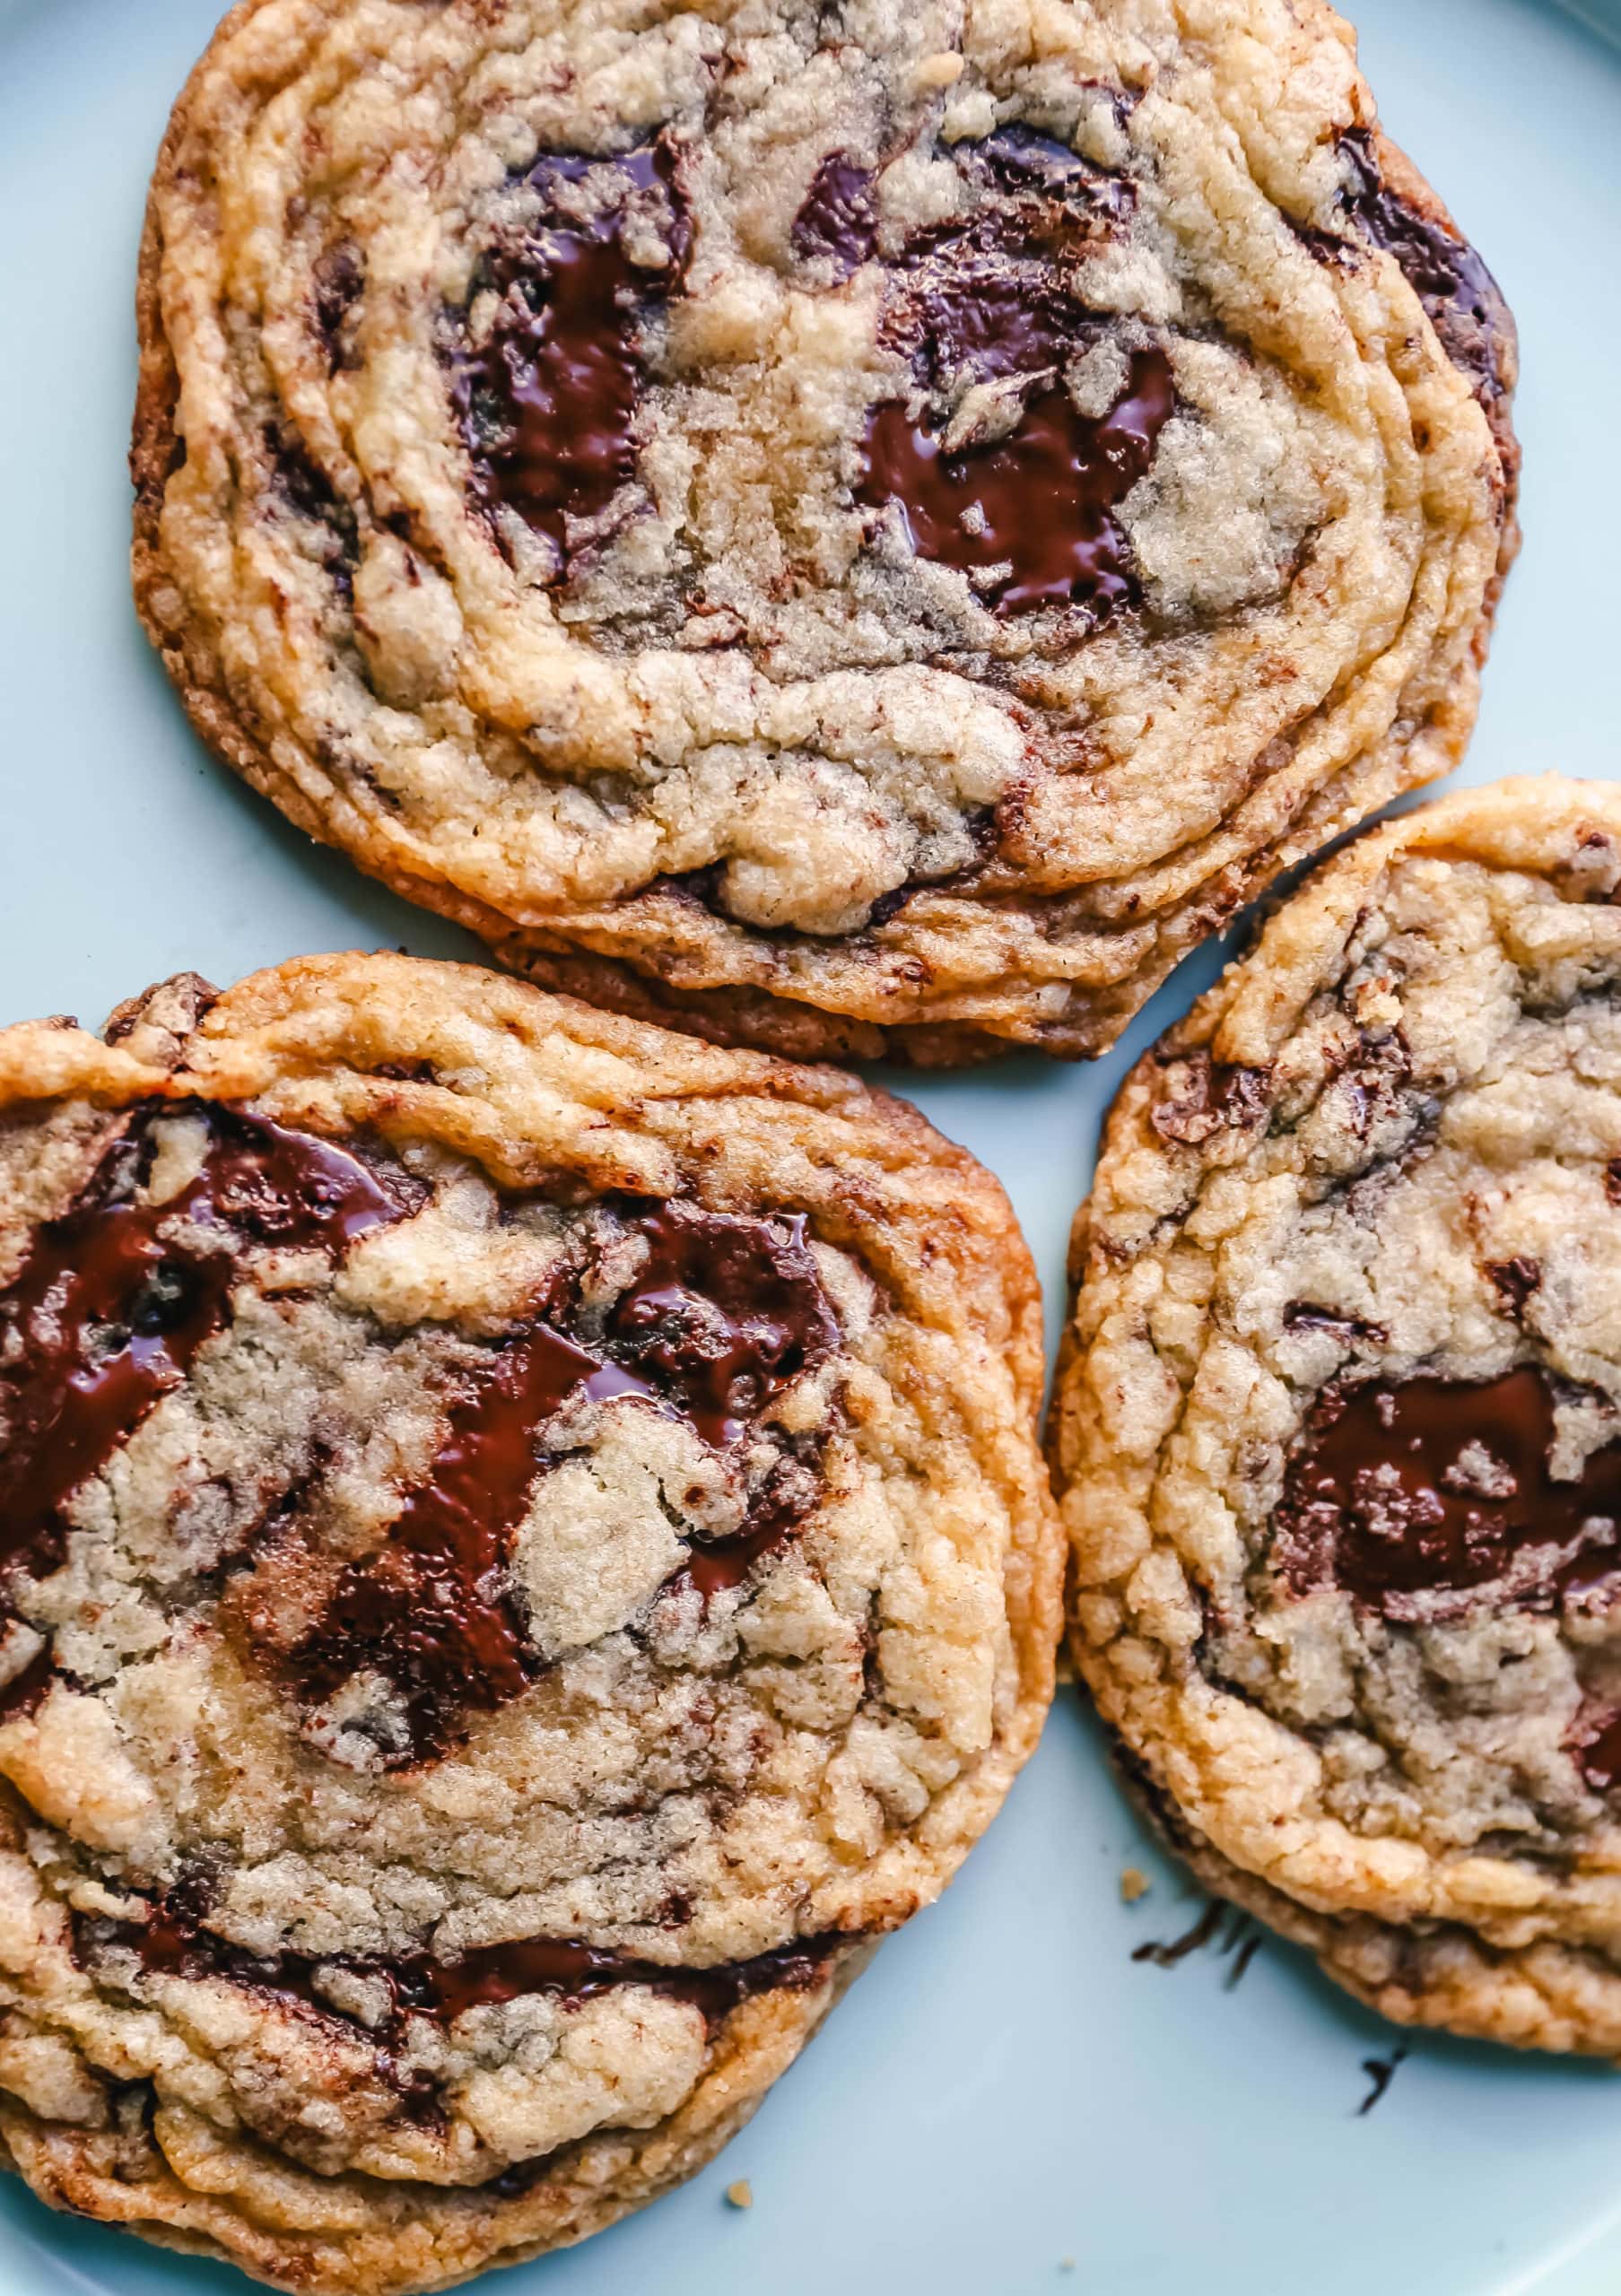 https://www.modernhoney.com/wp-content/uploads/2021/01/Pan-Banging-Chocolate-Chip-Cookies-10-scaled.jpg